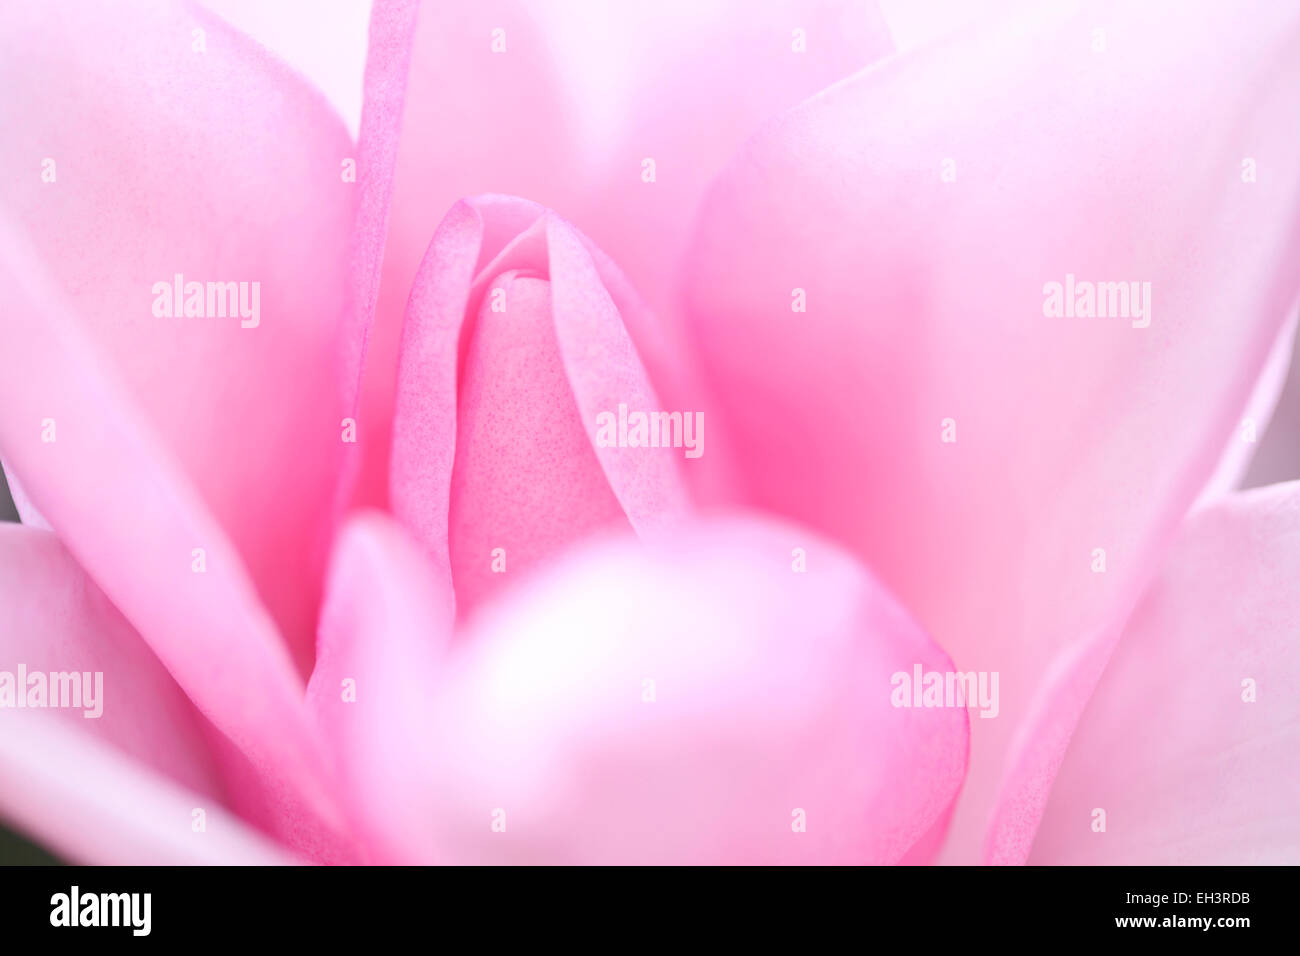 Exquisite Magnolia Campbellii Mollicomata pink bloom Jane Ann Butler Photography JABP751 Stock Photo